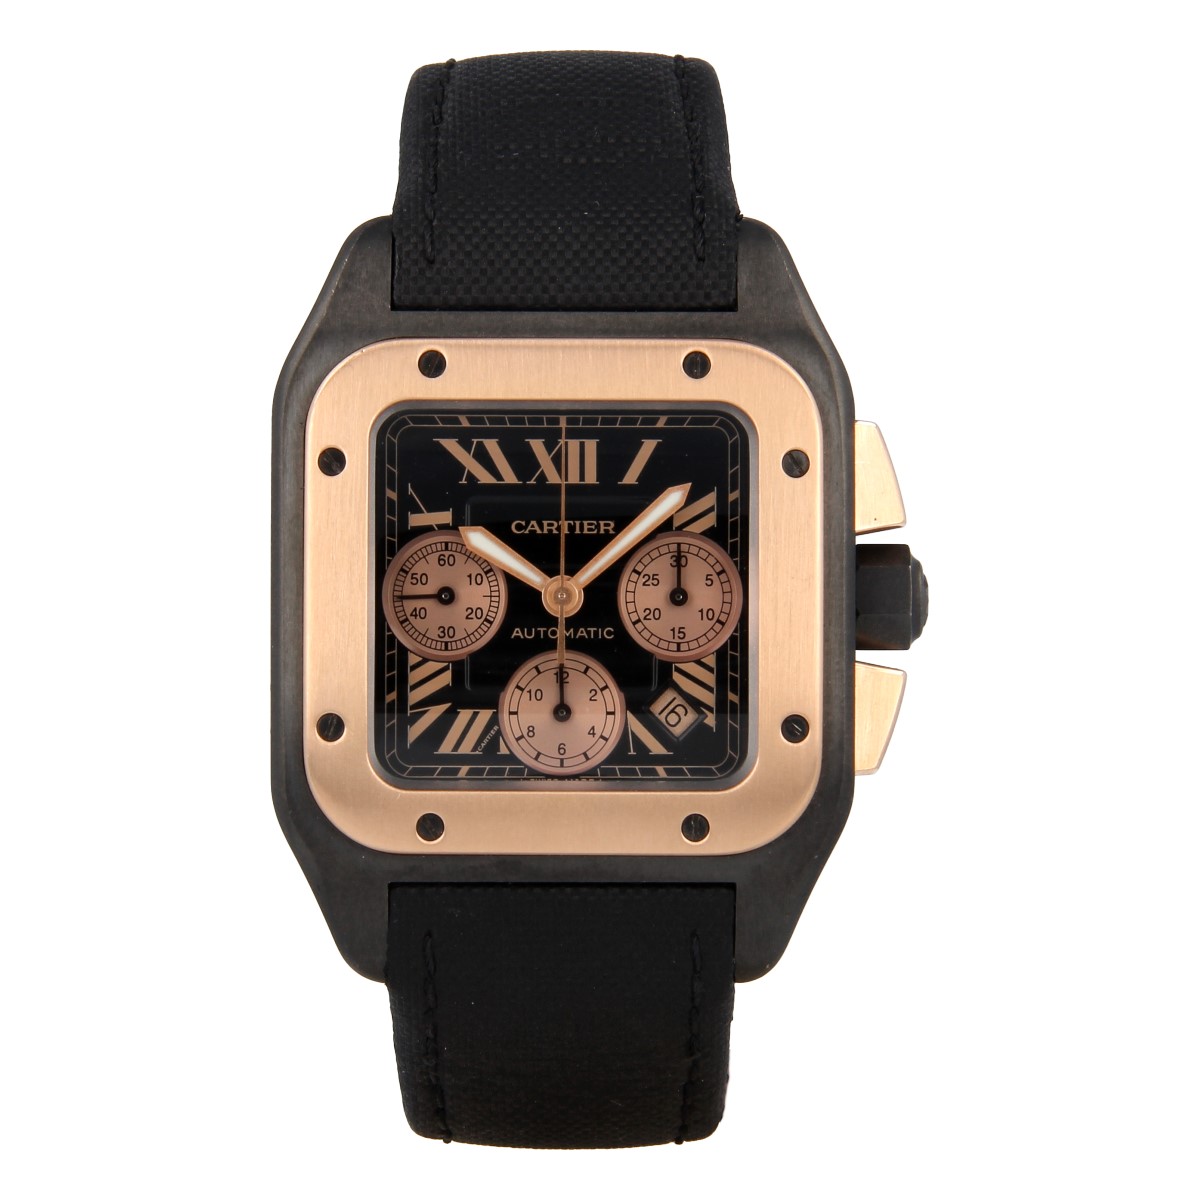 Cartier Santos 100 XL Chronograph Titanium and Rose Gold | Buy pre-owned Cartier watch